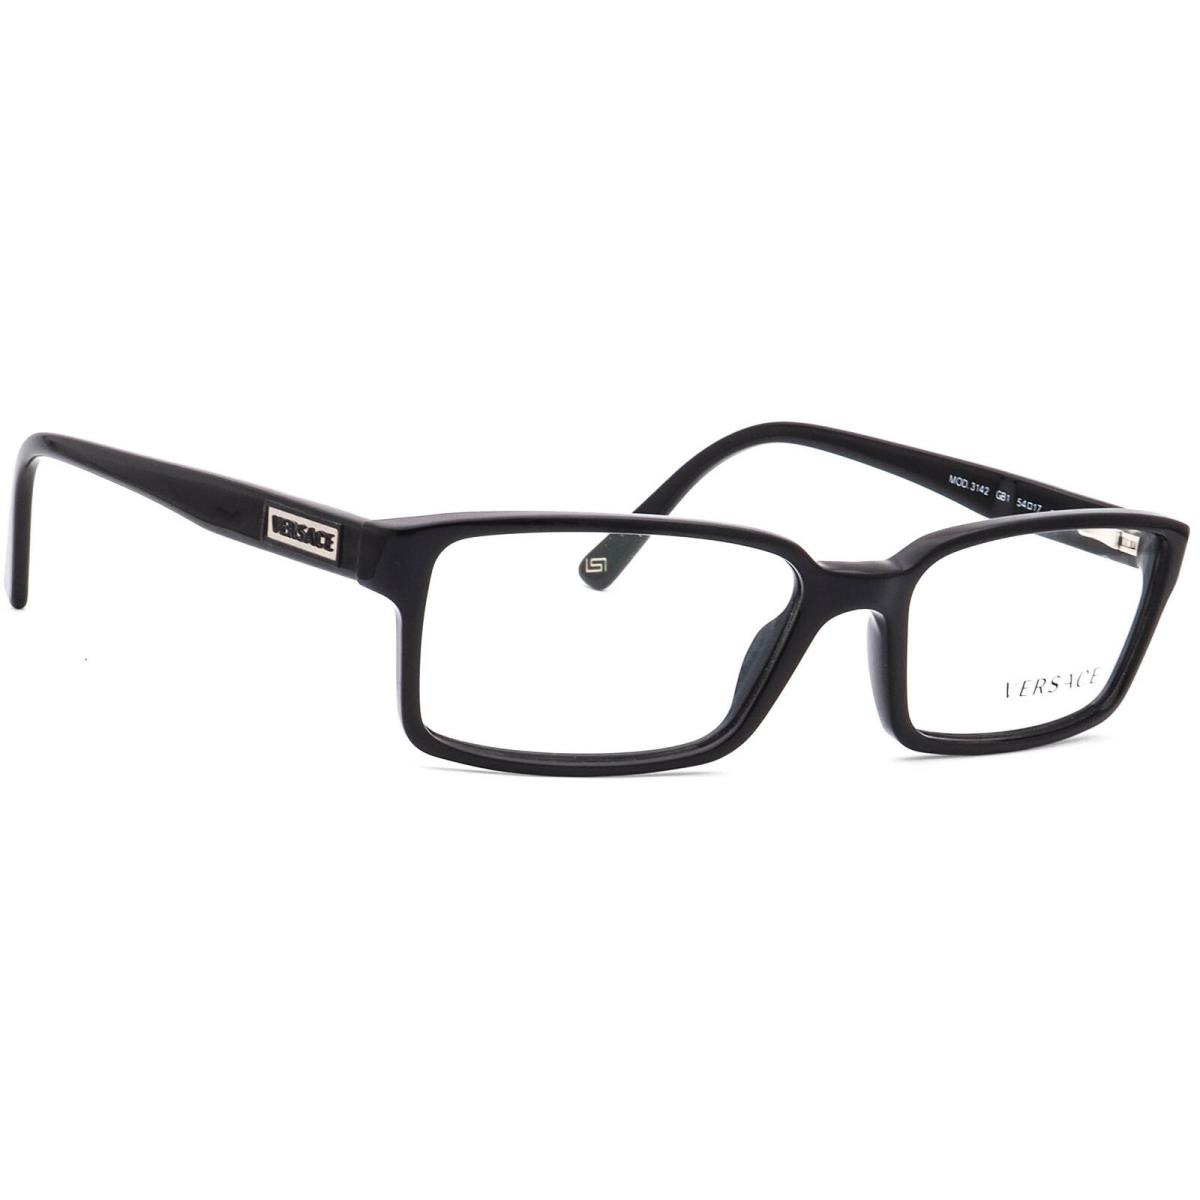 Versace Eyeglasses Mod. 3142 GB1 Black Rectangular Frame Italy 54 17 140